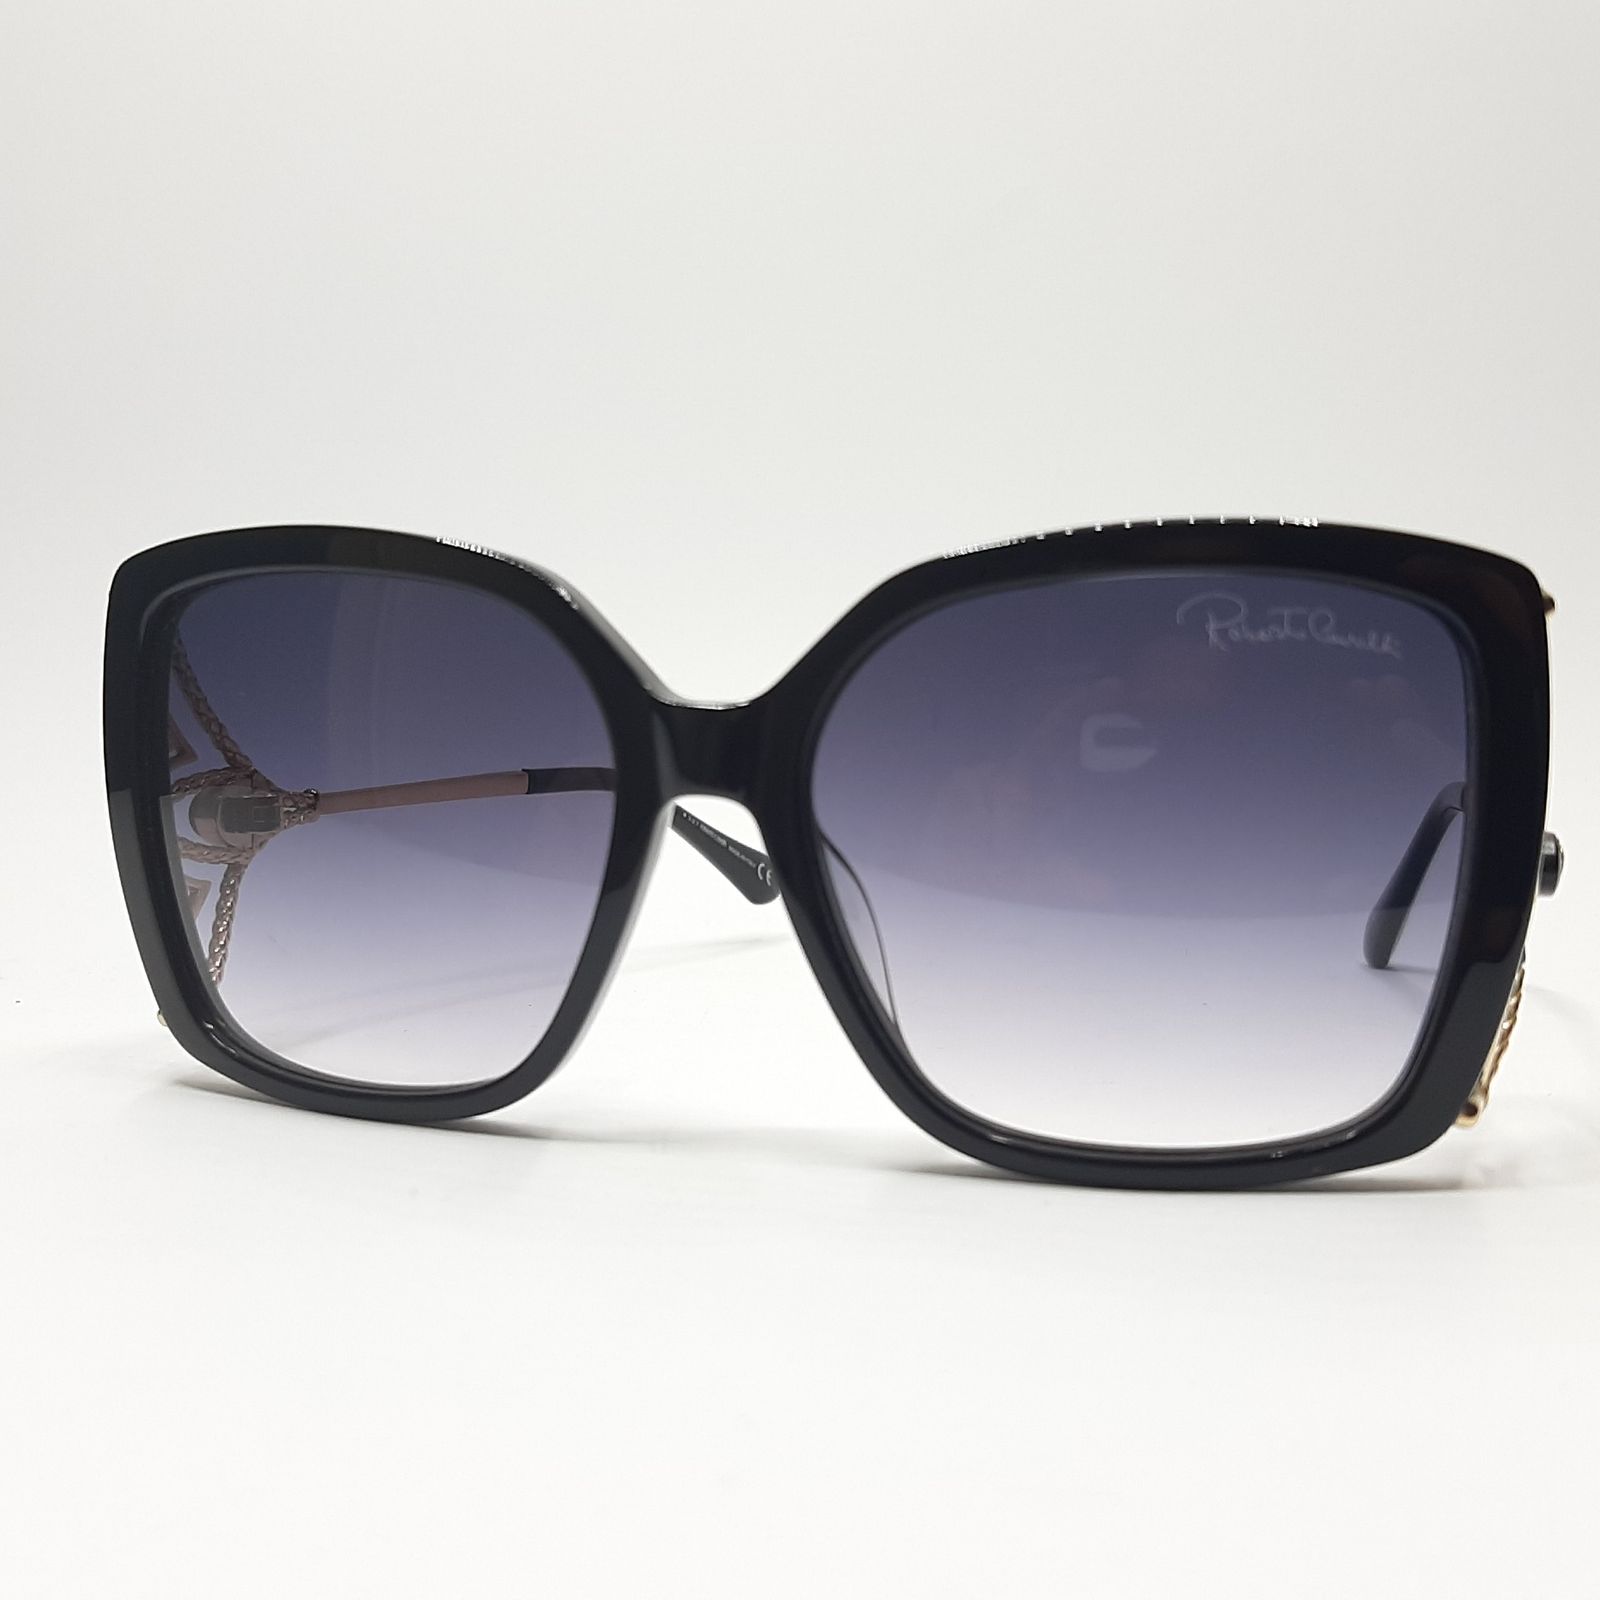 عینک آفتابی زنانه روبرتو کاوالی مدل RC105816c -  - 2